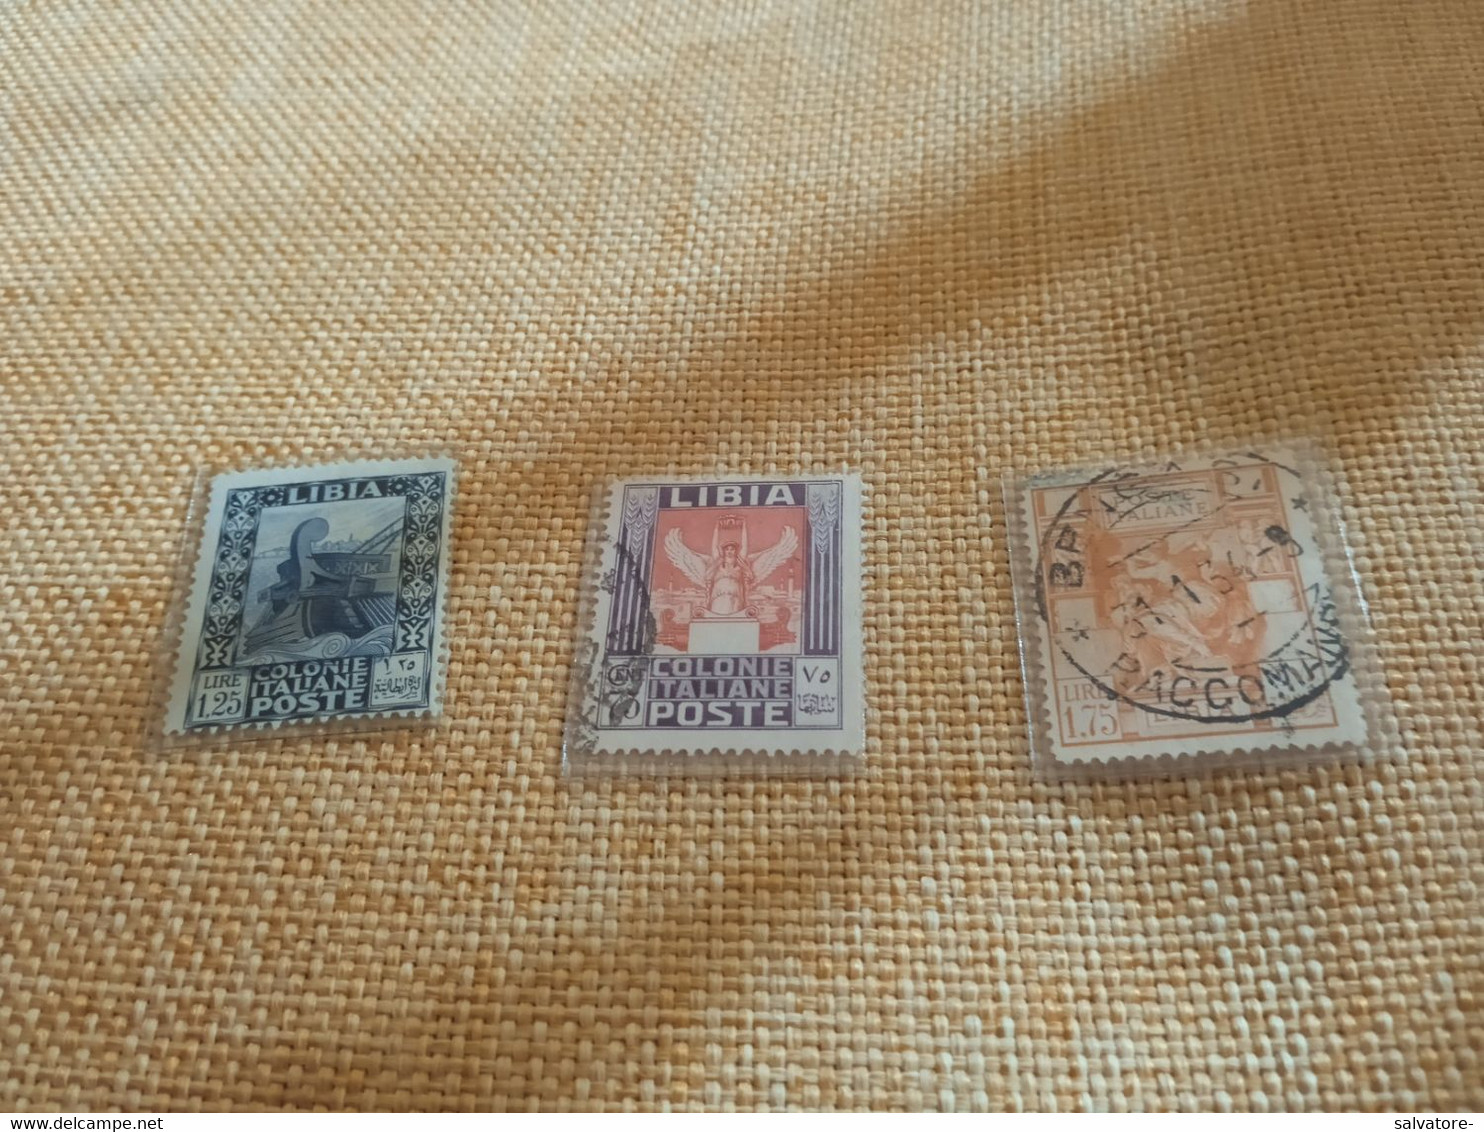 Francobolli LIBIA VALORI LIRE 1,75,1,25,75 CENTESIMI- ANNULLATI - Libyen